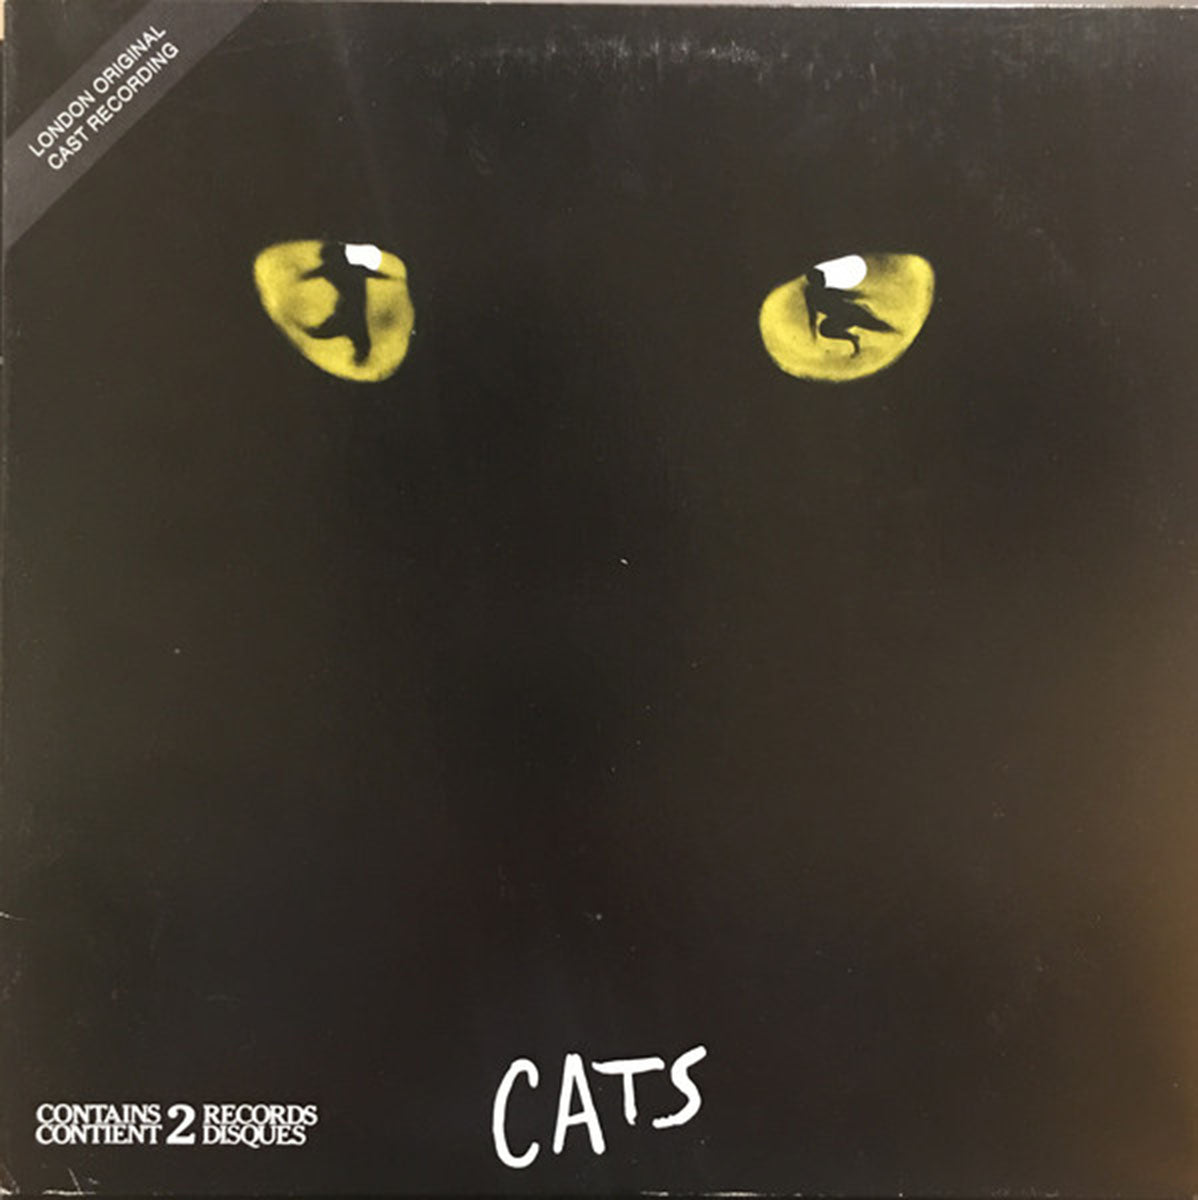 Cats - Andrew Lloyd Webber